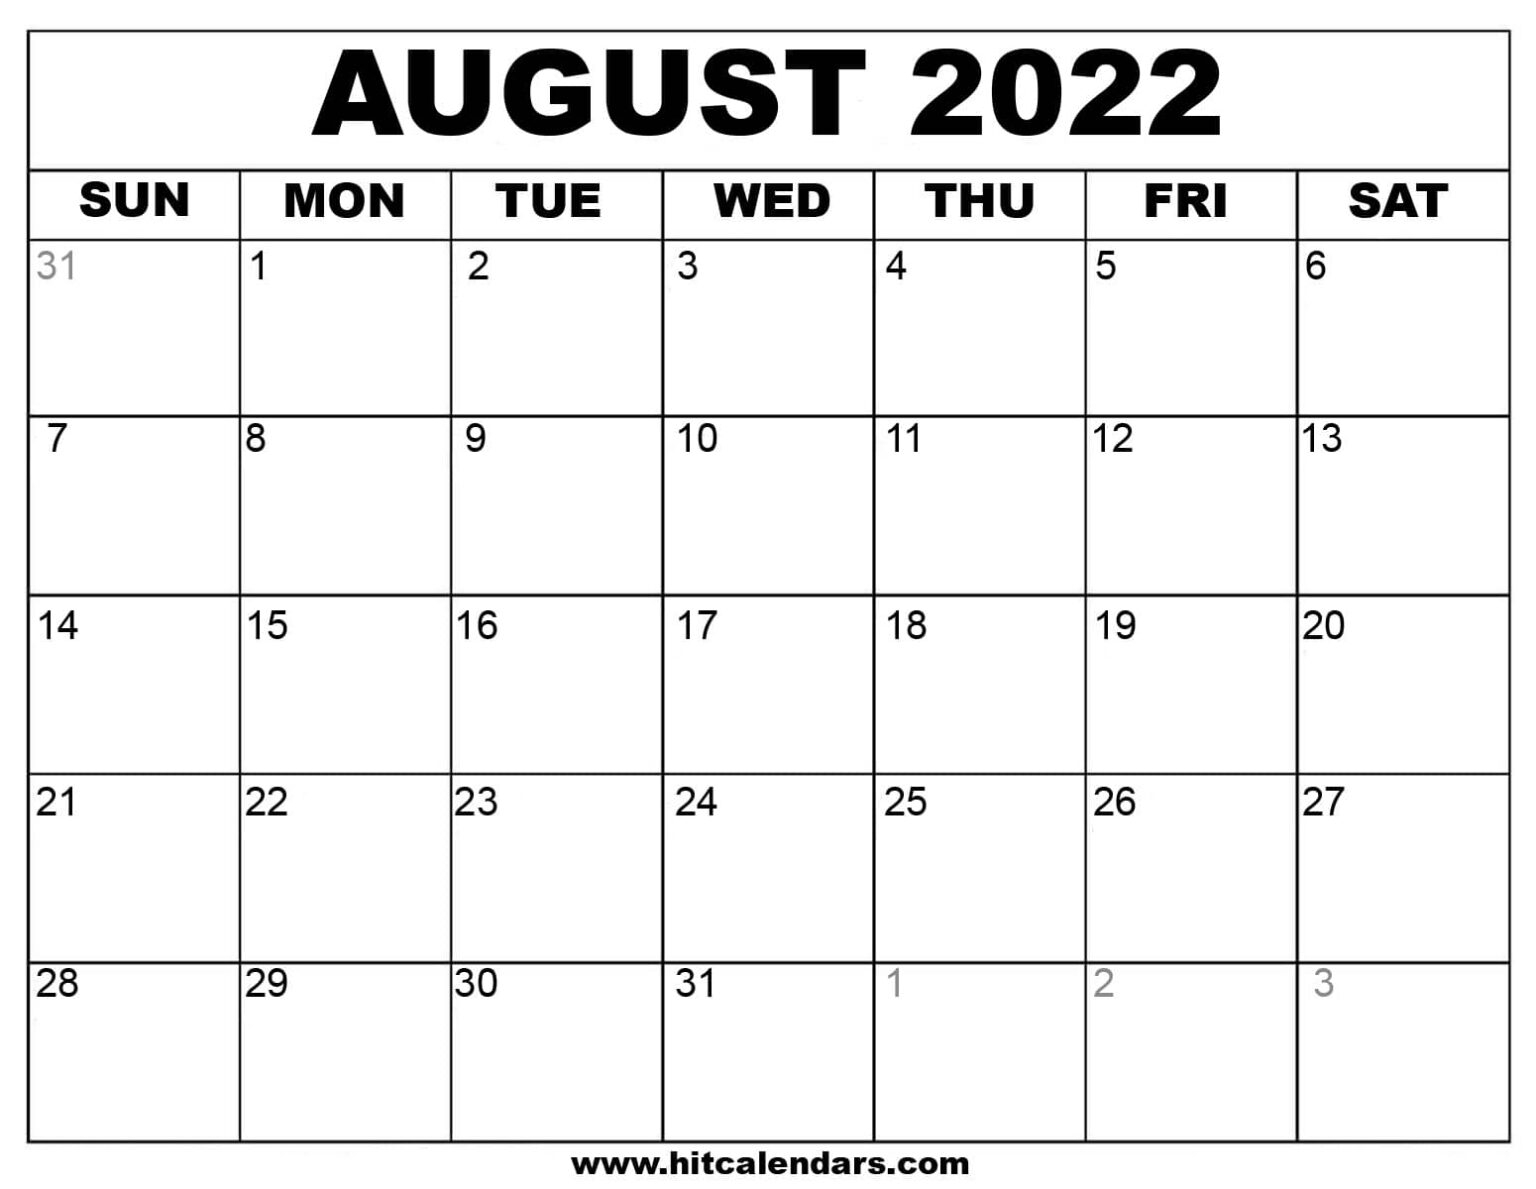 August 2022 Calendar - Calendar Printable 2022